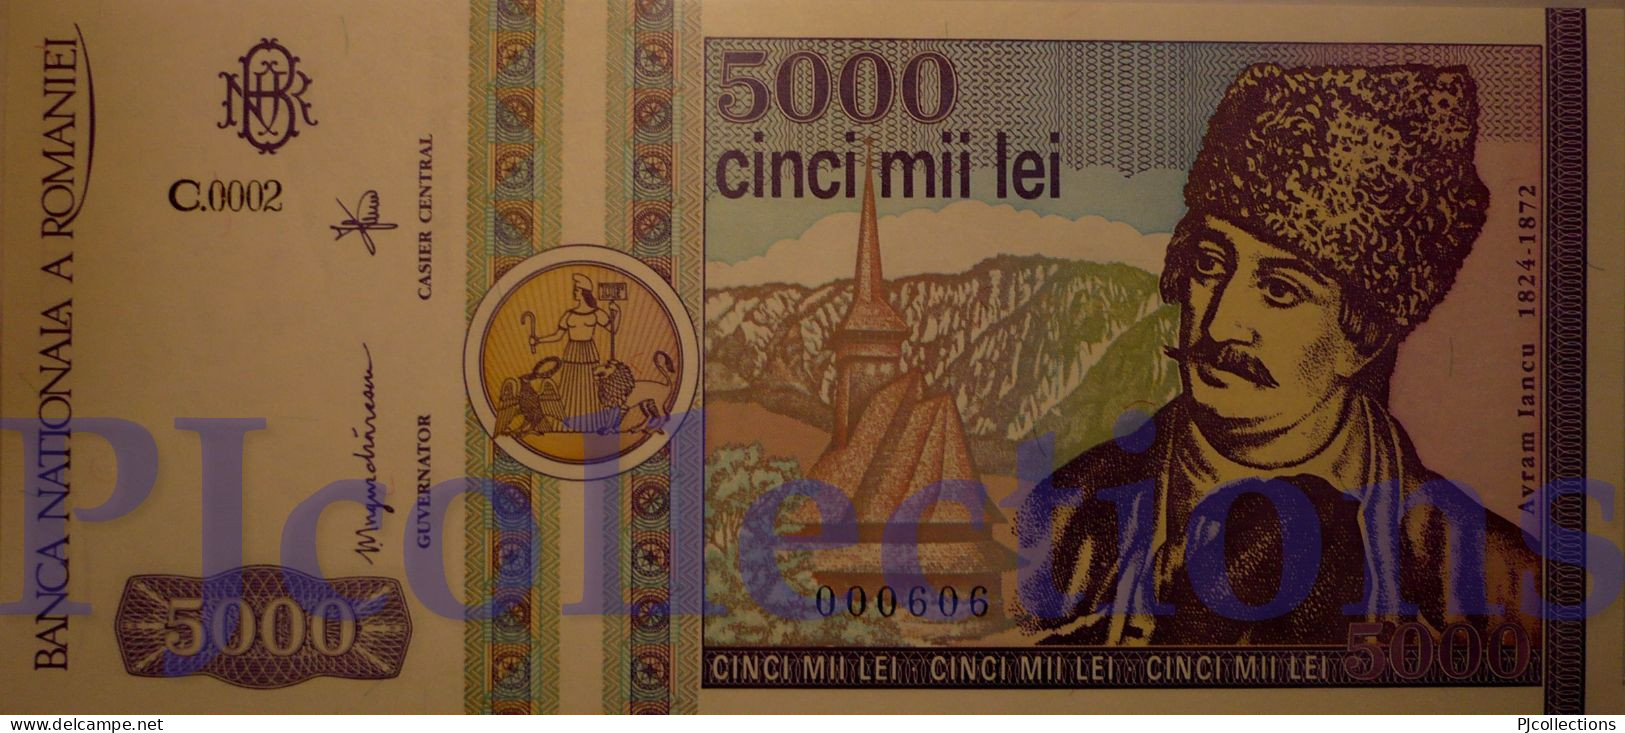 ROMANIA 5000 LEI 1992 PICK 103 UNC LOW & GOOD SERIAL NUMBER "000606" - Roumanie